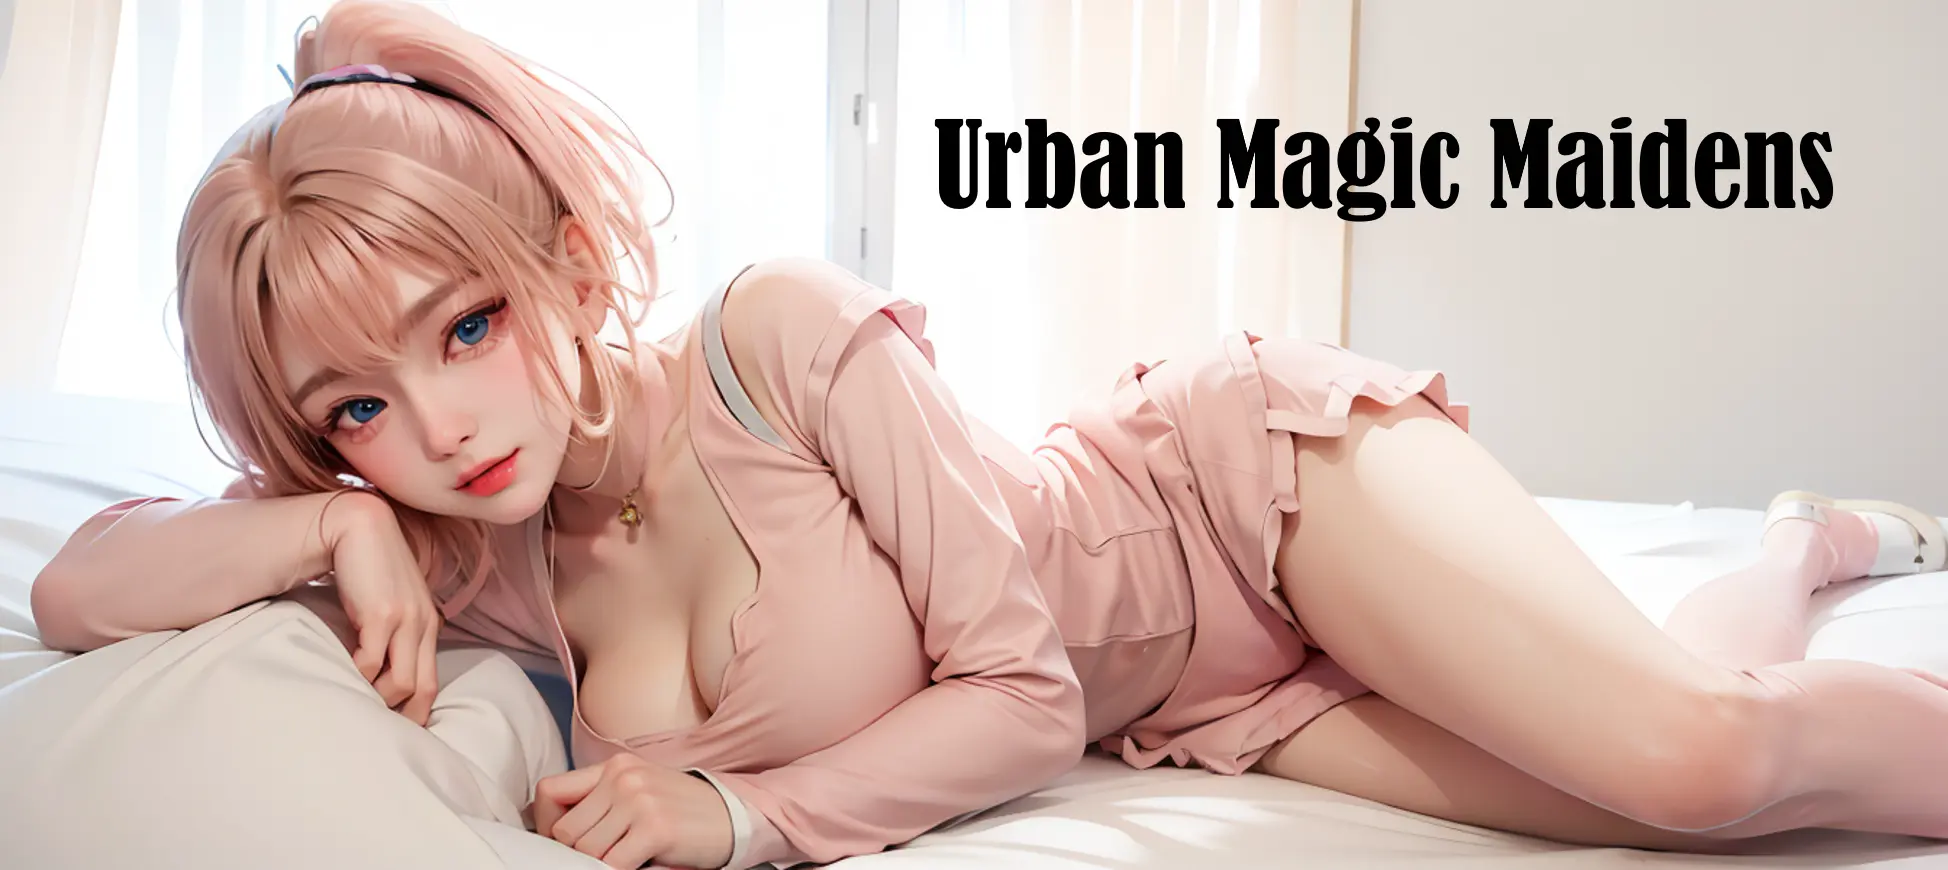 Urban Magic Maidens main image